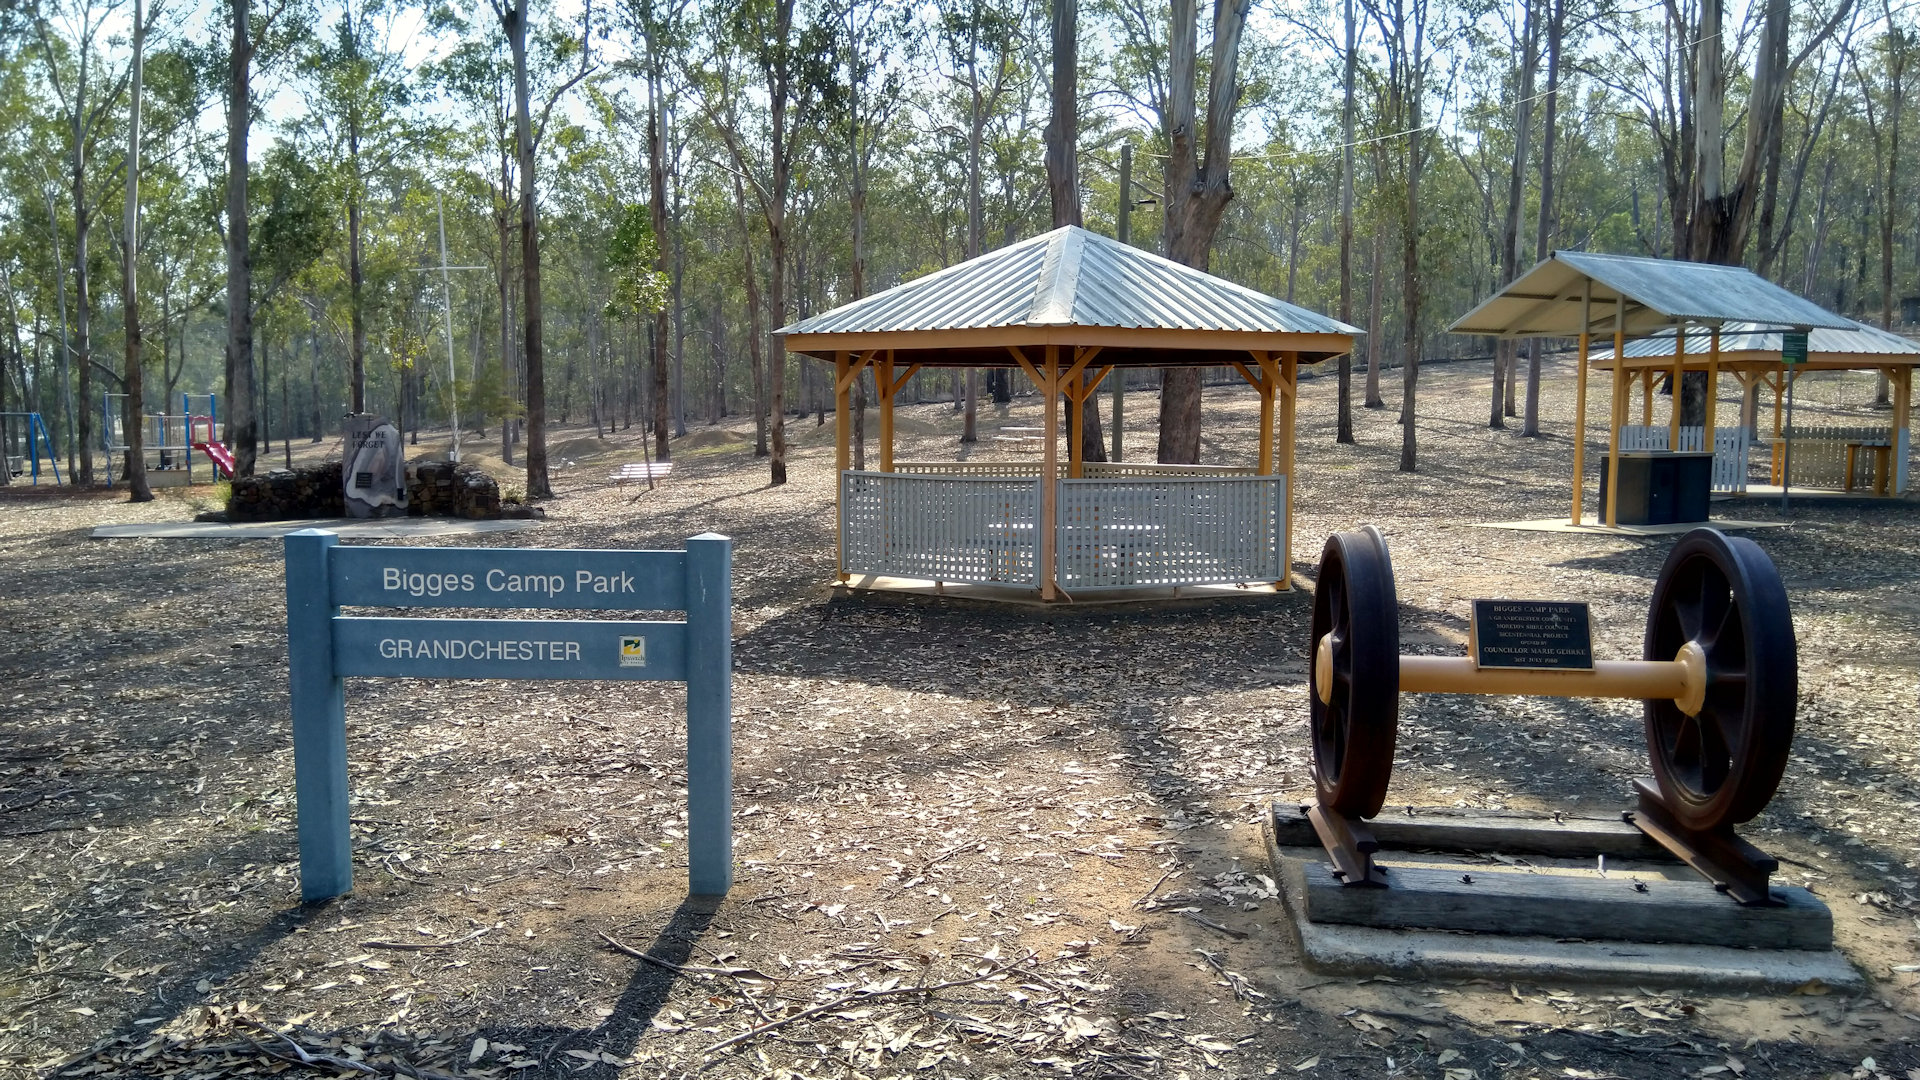 Bigges Camp Park, rotunda and railway wheels